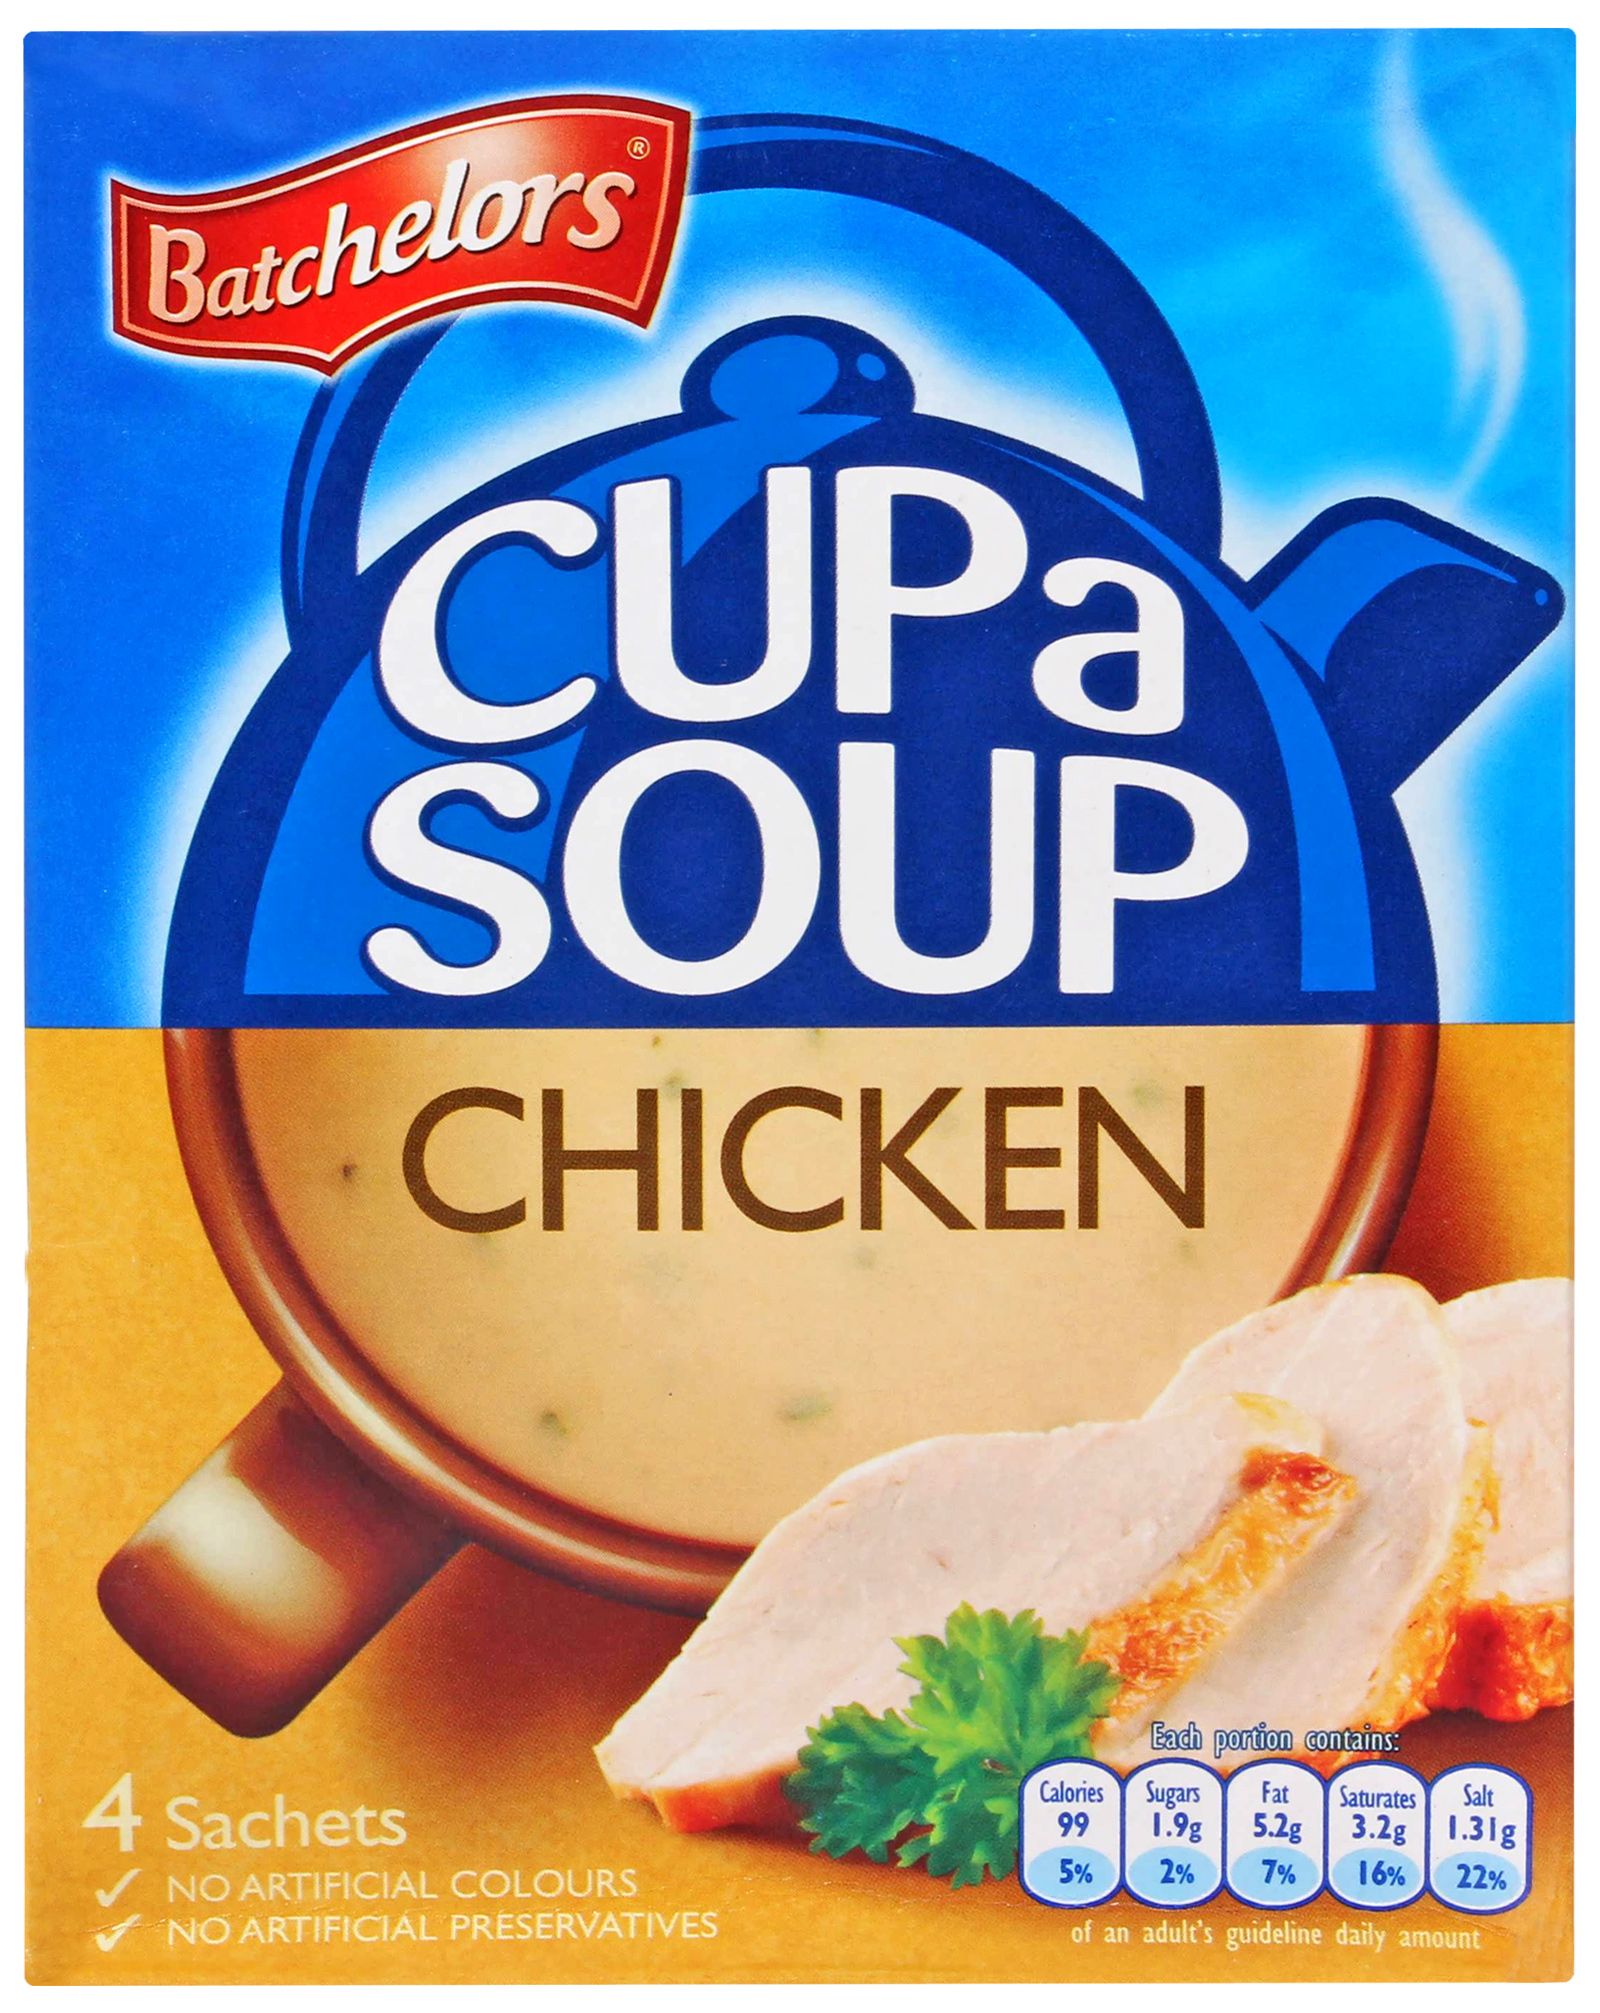 Cuppa Soup